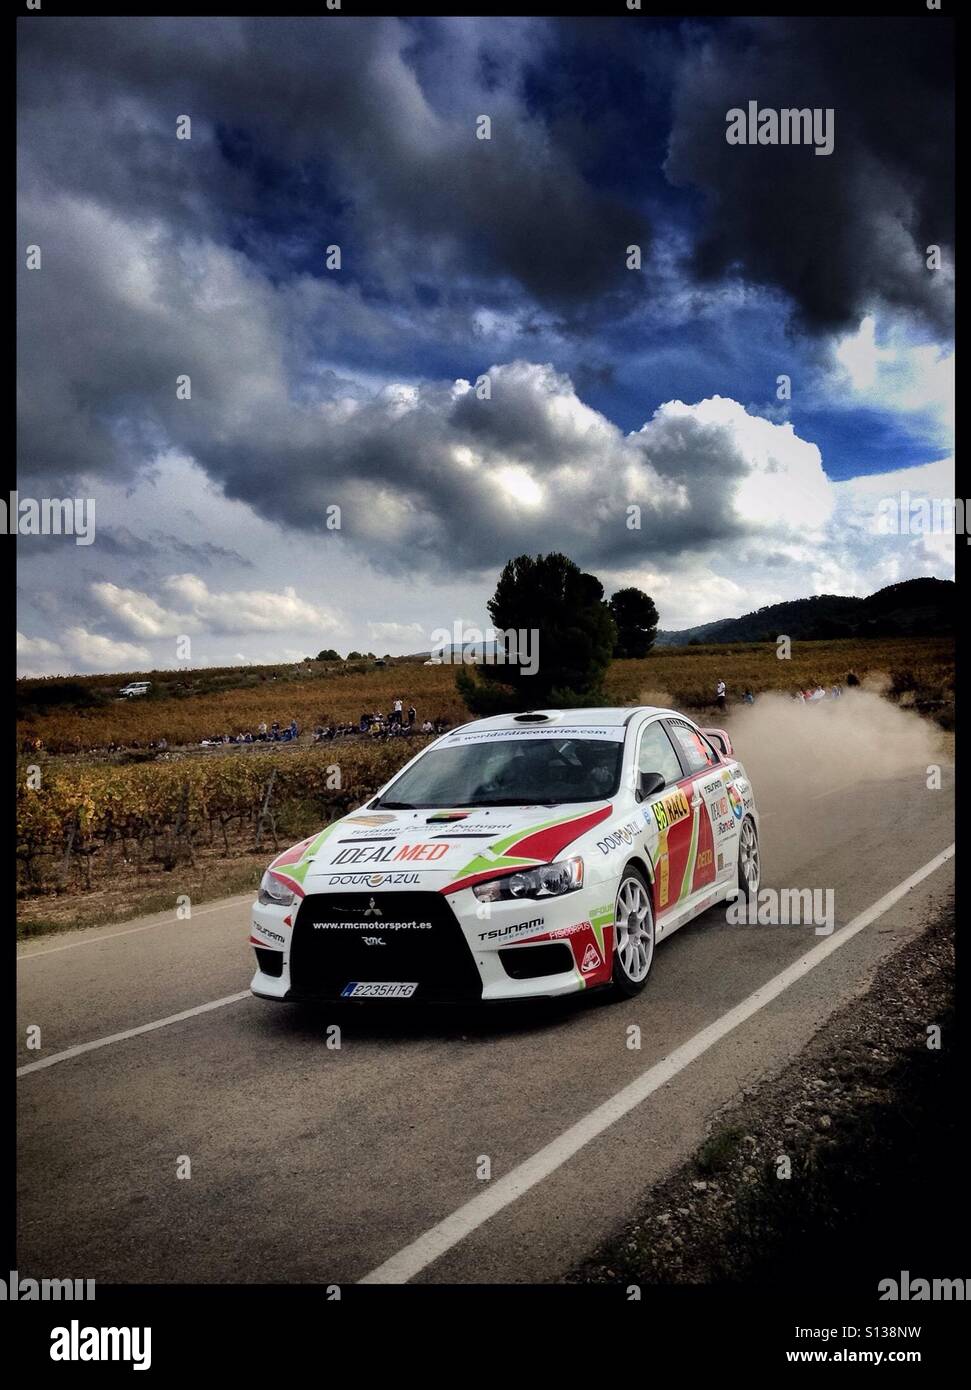 2015 rallye WRC Rally de España RACC-SS21 Guiamets Els Guiamets [2] Joao Ramos/Jose Janela - Mitsubishi Lancer Evo X voiture rallye, Catalogne, Espagne. Banque D'Images